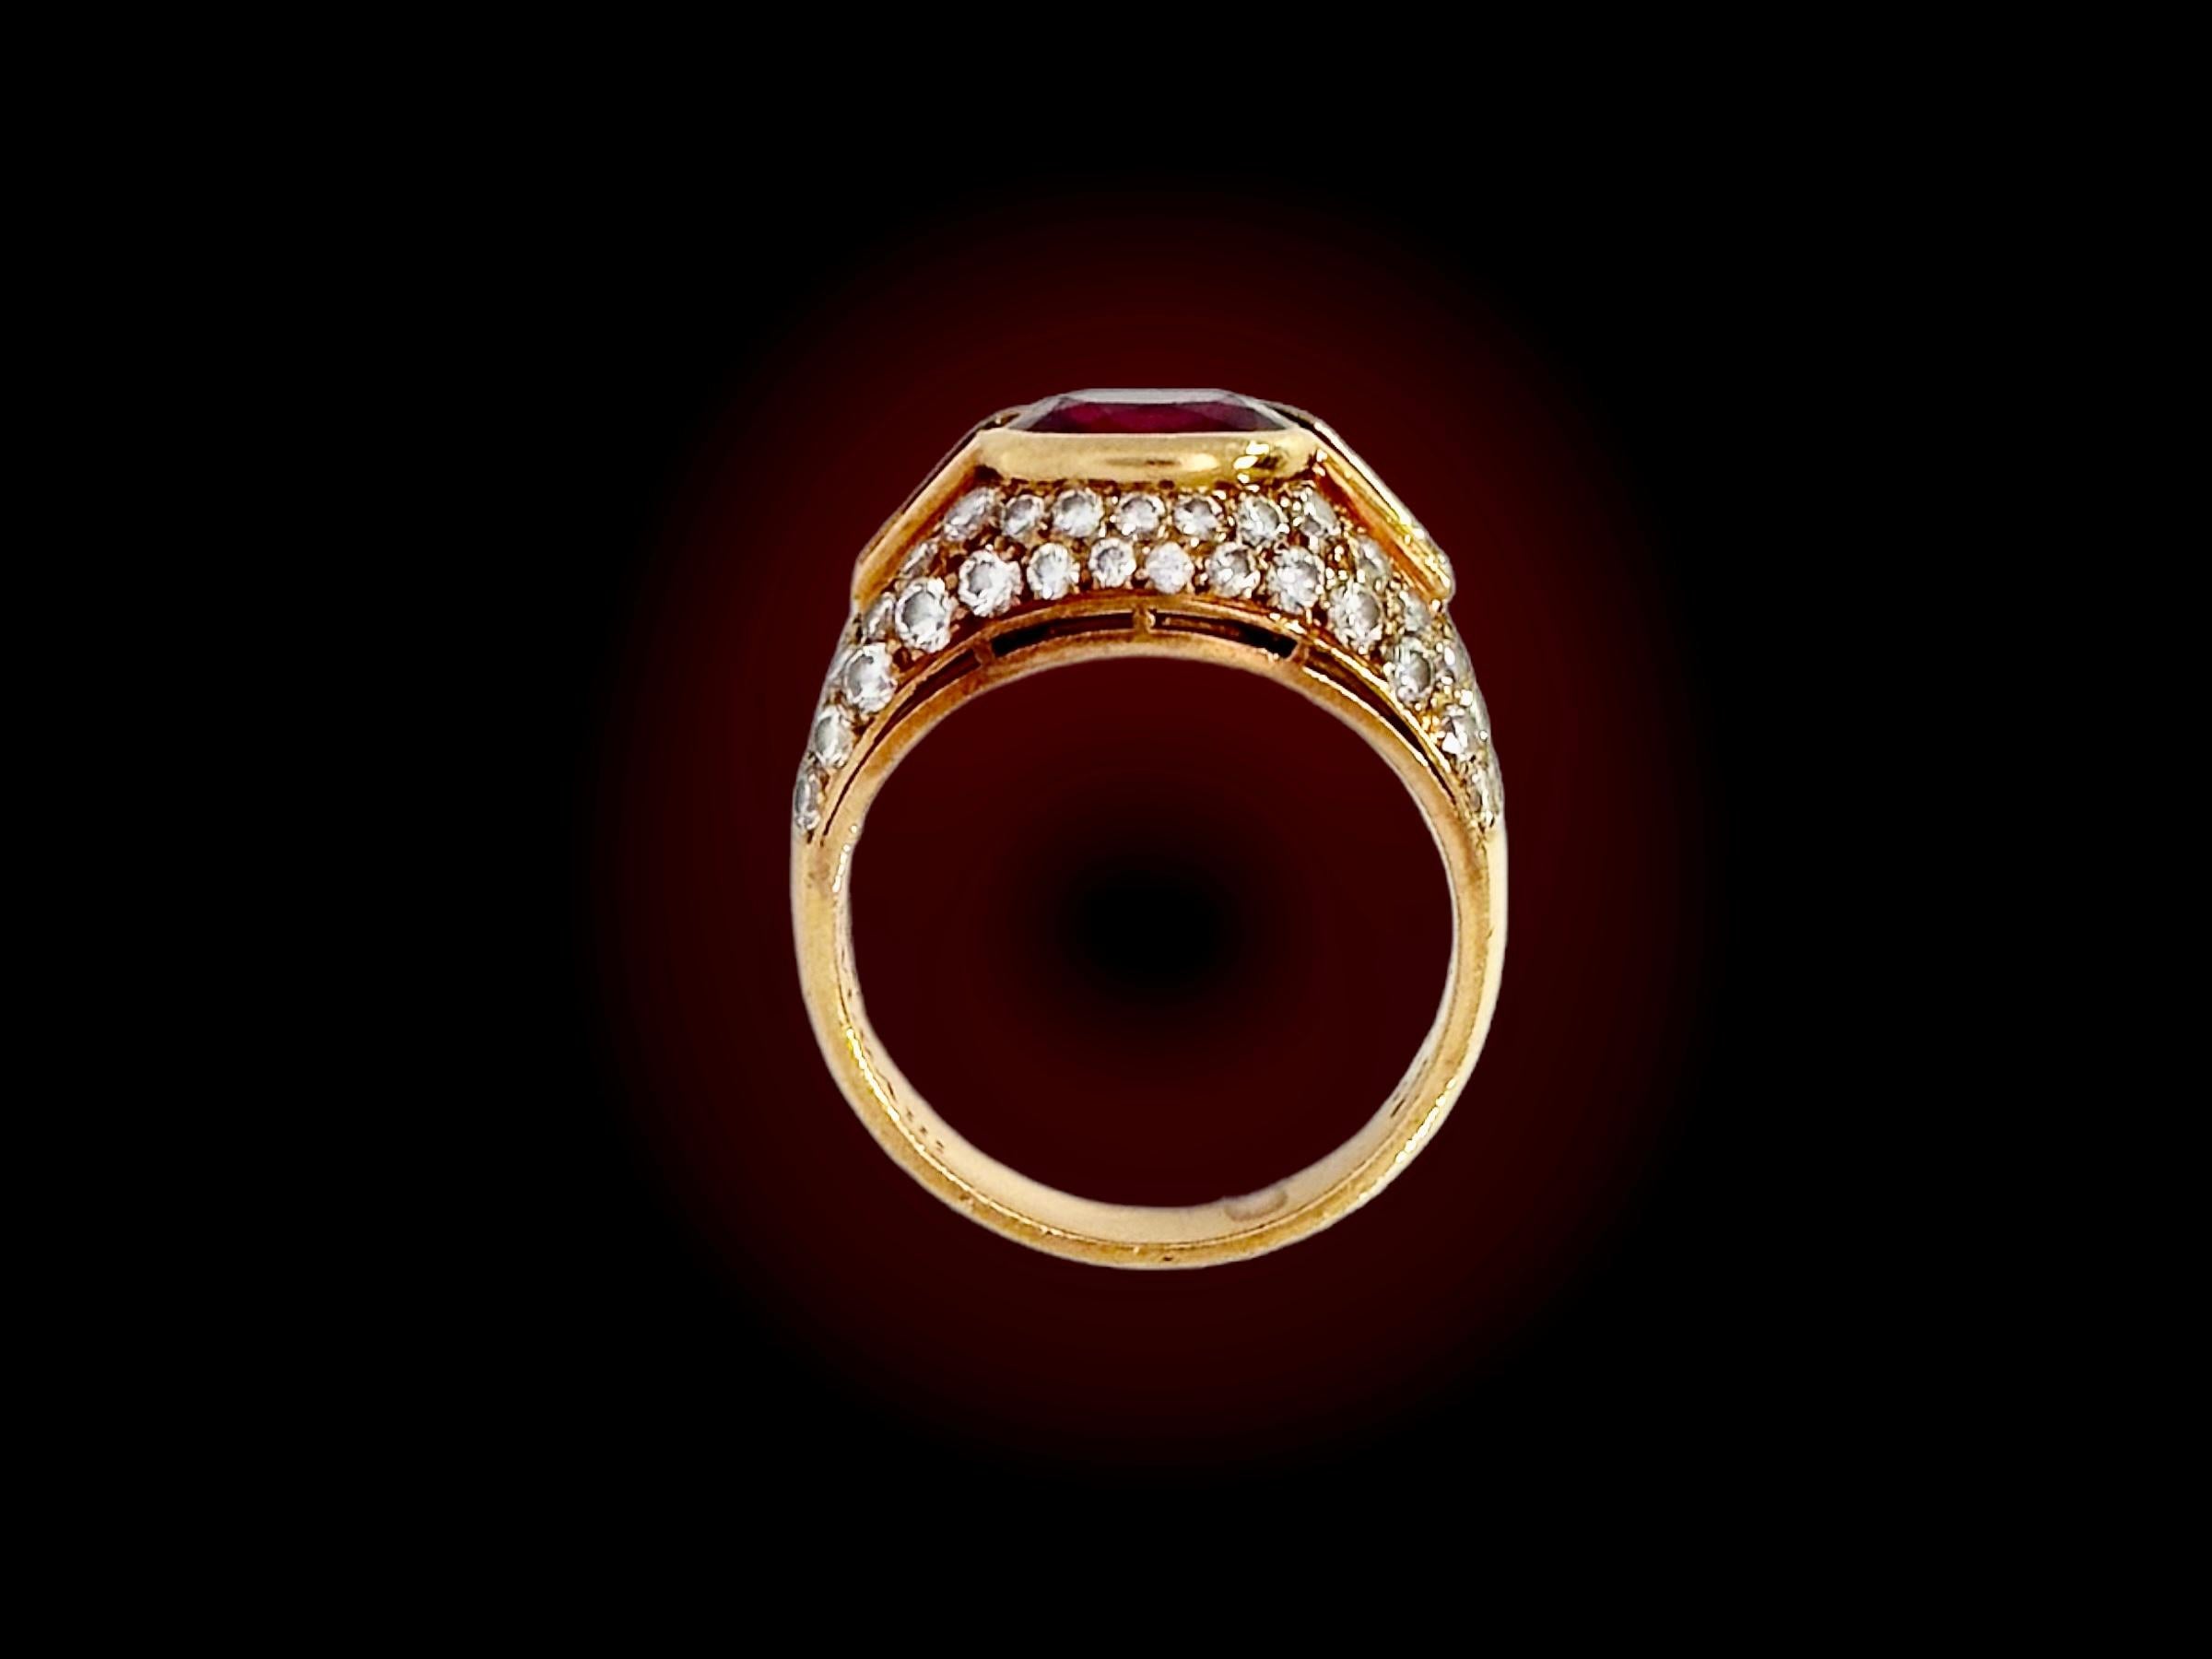 Bvlgari Trombino 18kt Yellow Gold Ring 2.09ct Ruby & Diamonds With GRS Cert For Sale 1